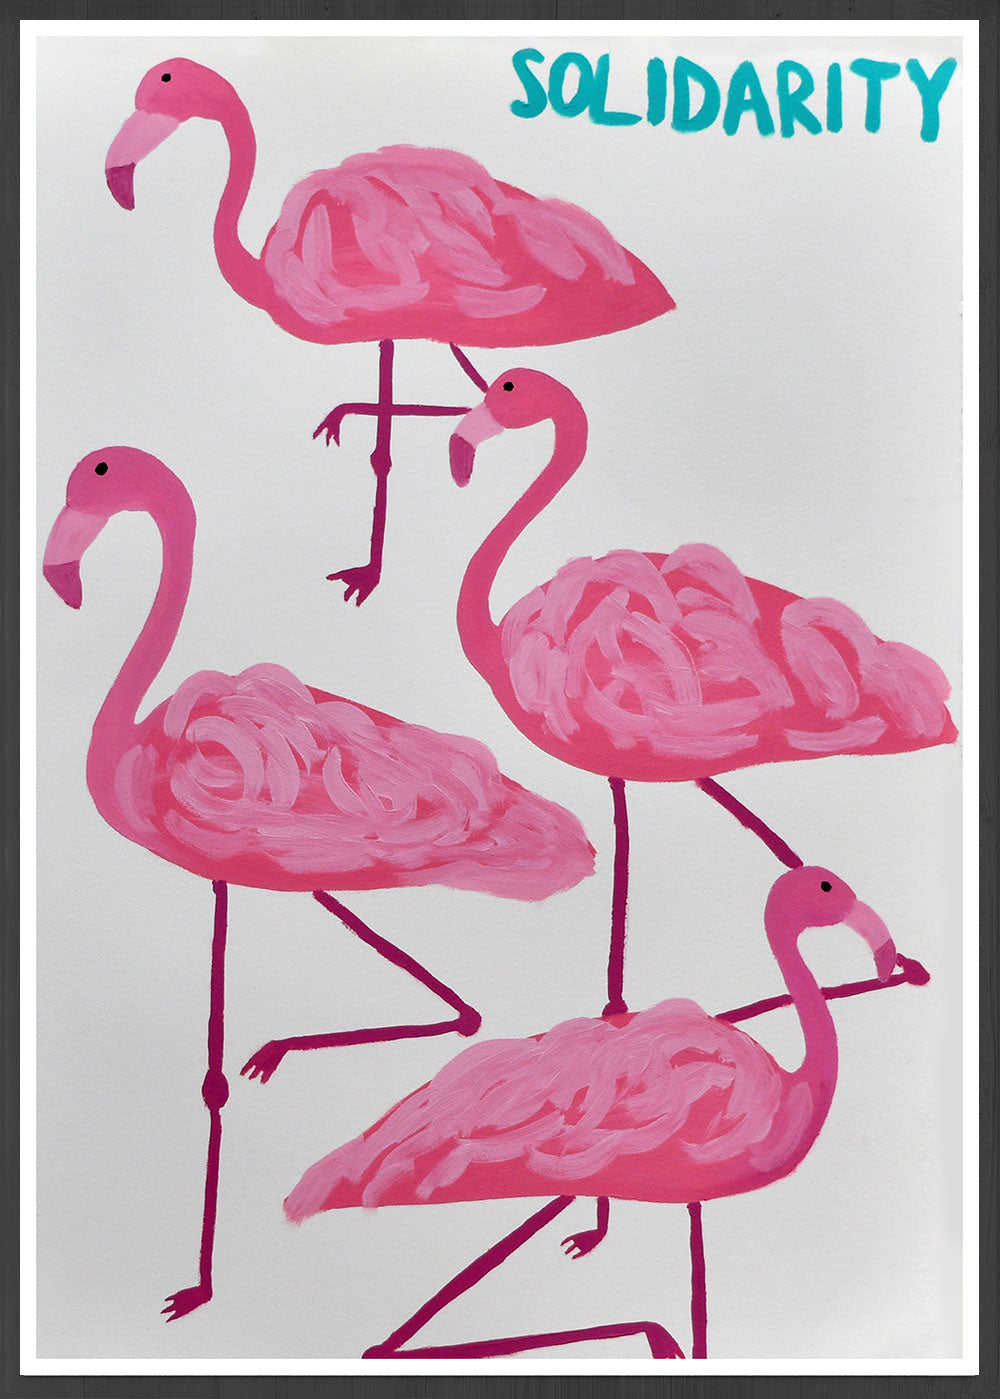 Solidarity Flamingo Wall Print in a frame